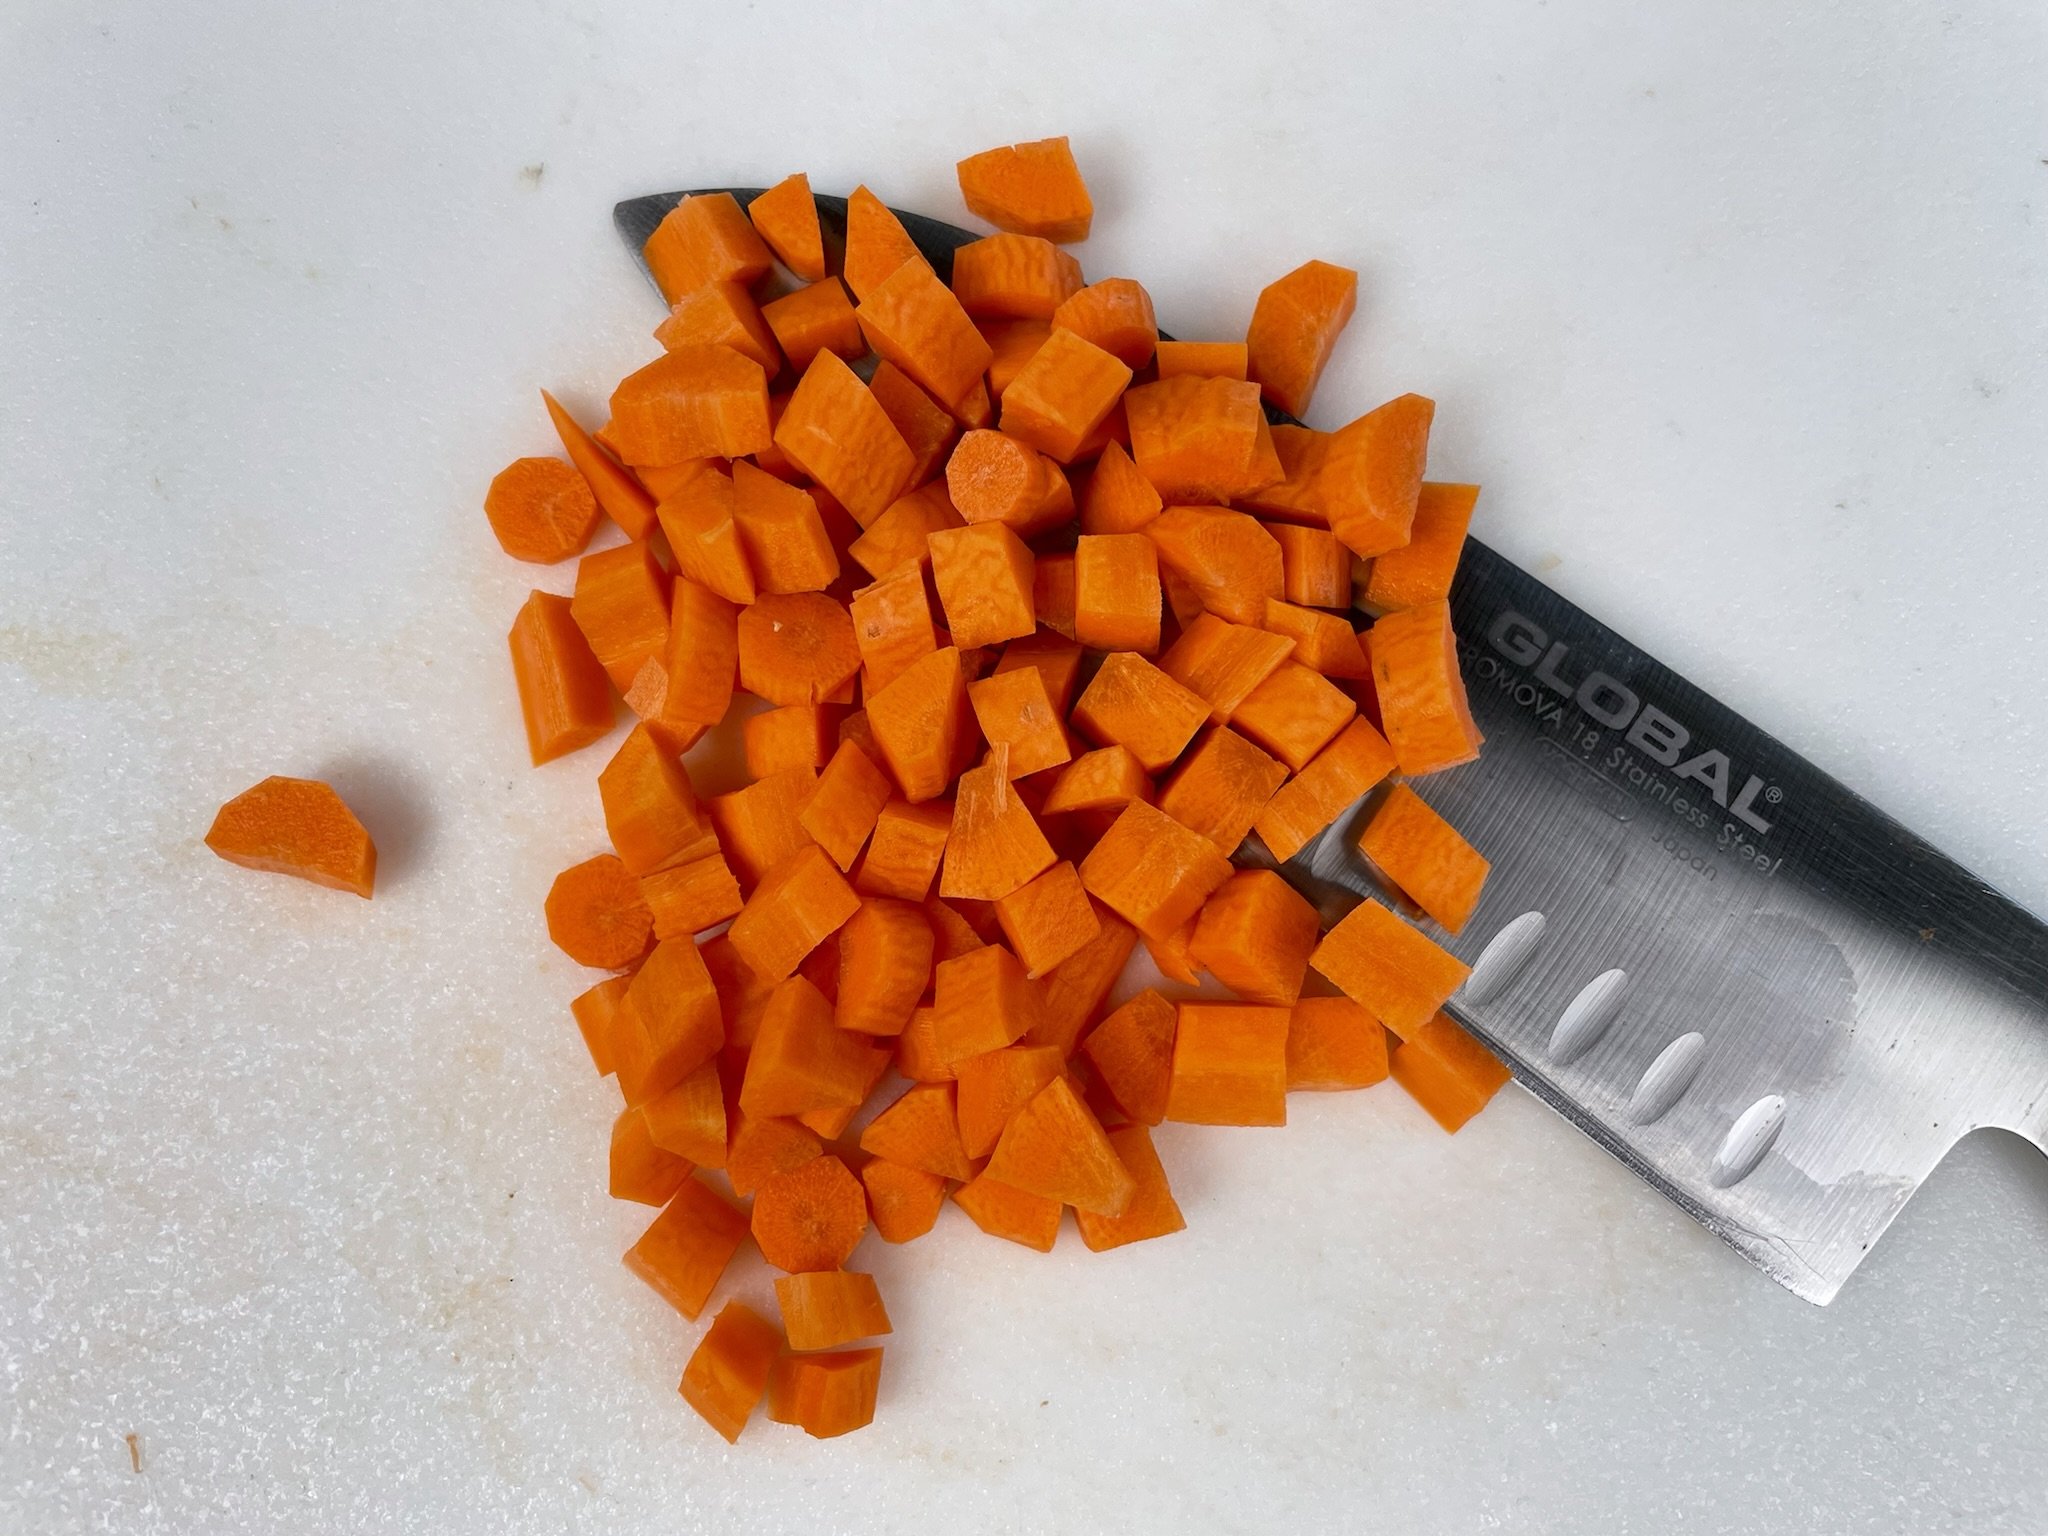 Diced carrots.